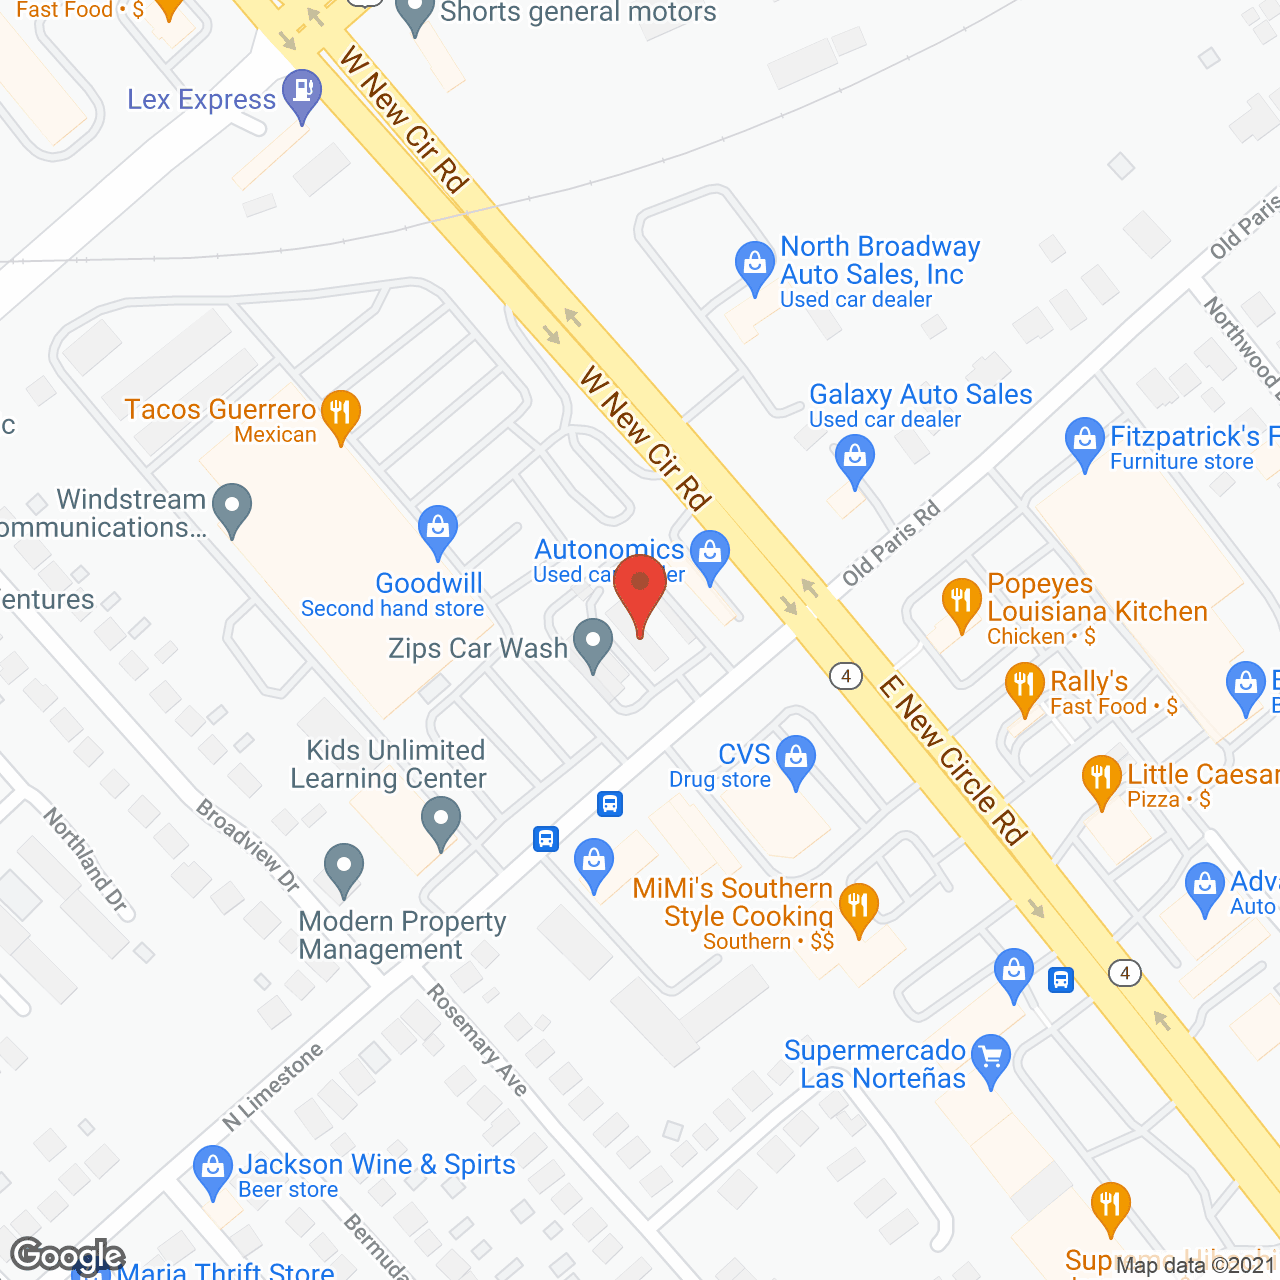 SunBridge Care and Rehabilitation - Limestone Street in google map